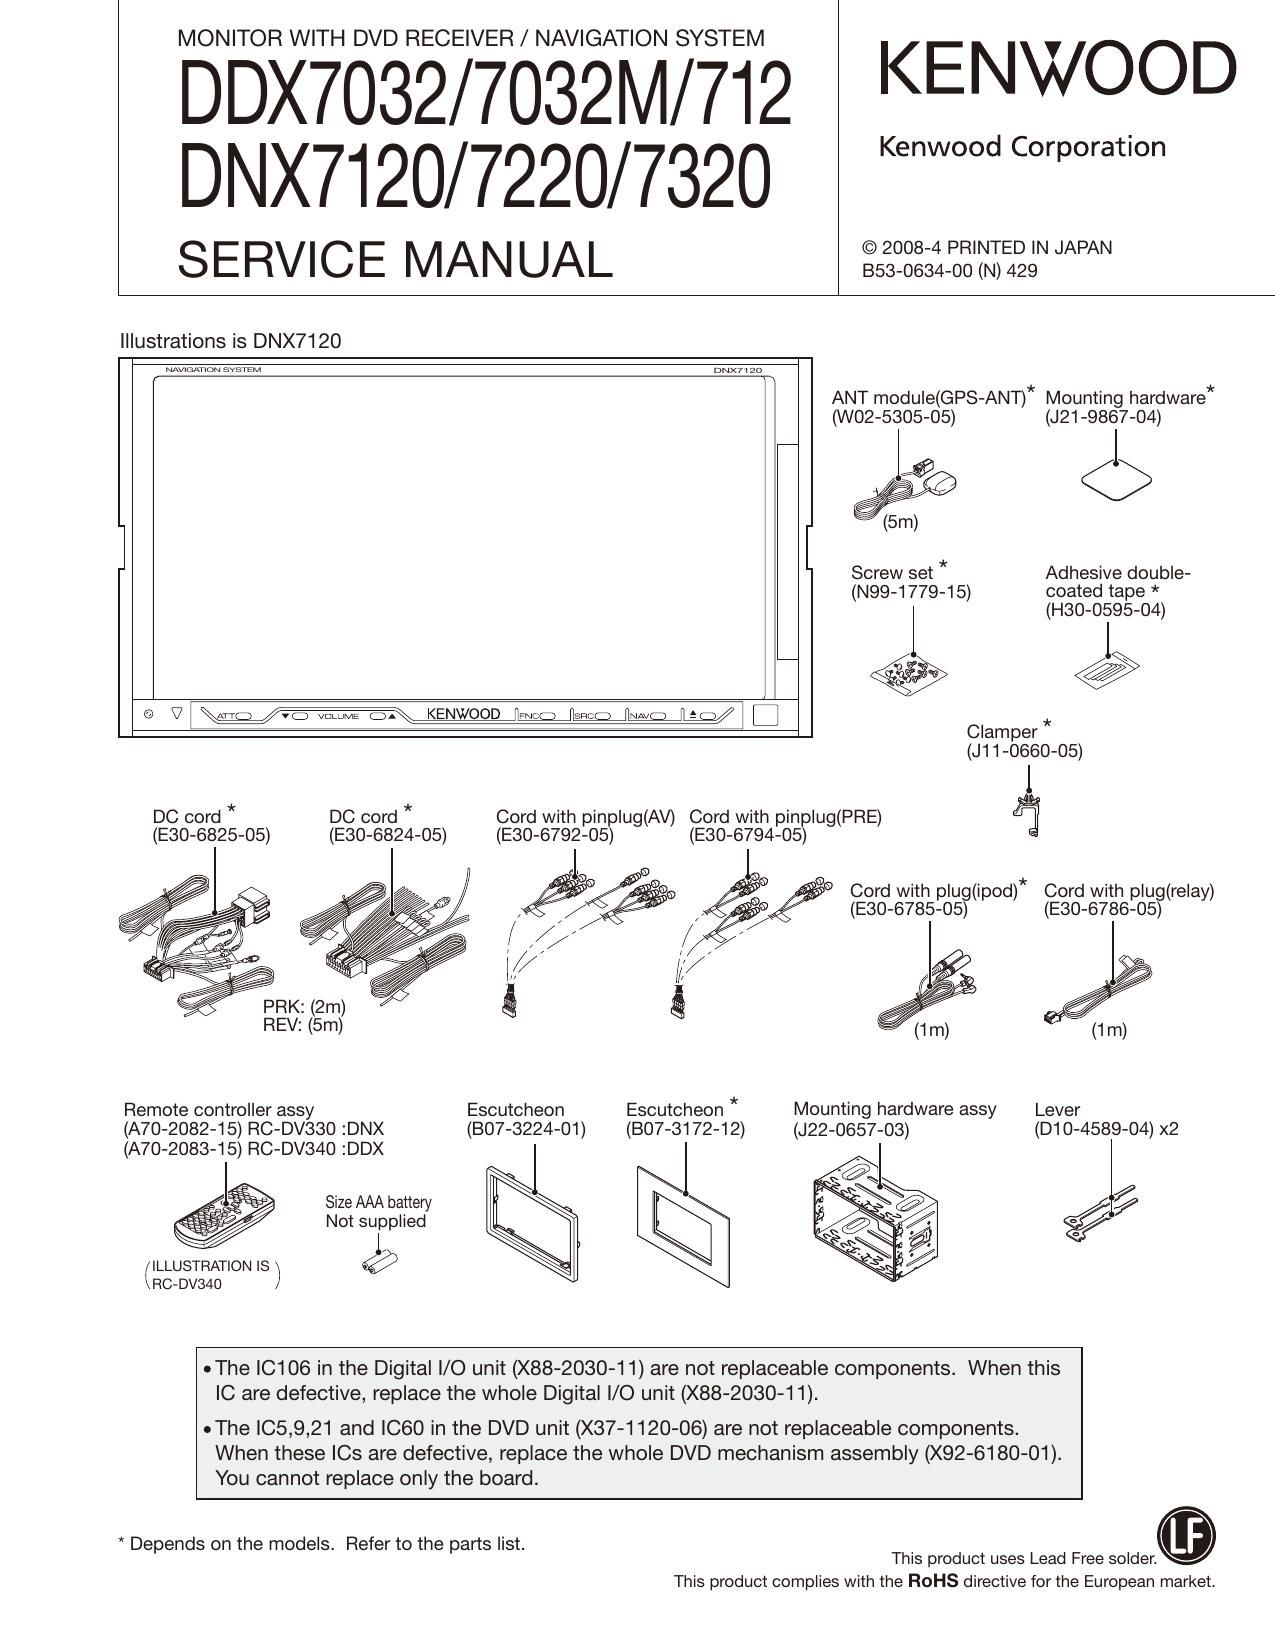 Kenwood DNX 7320 Service Manual